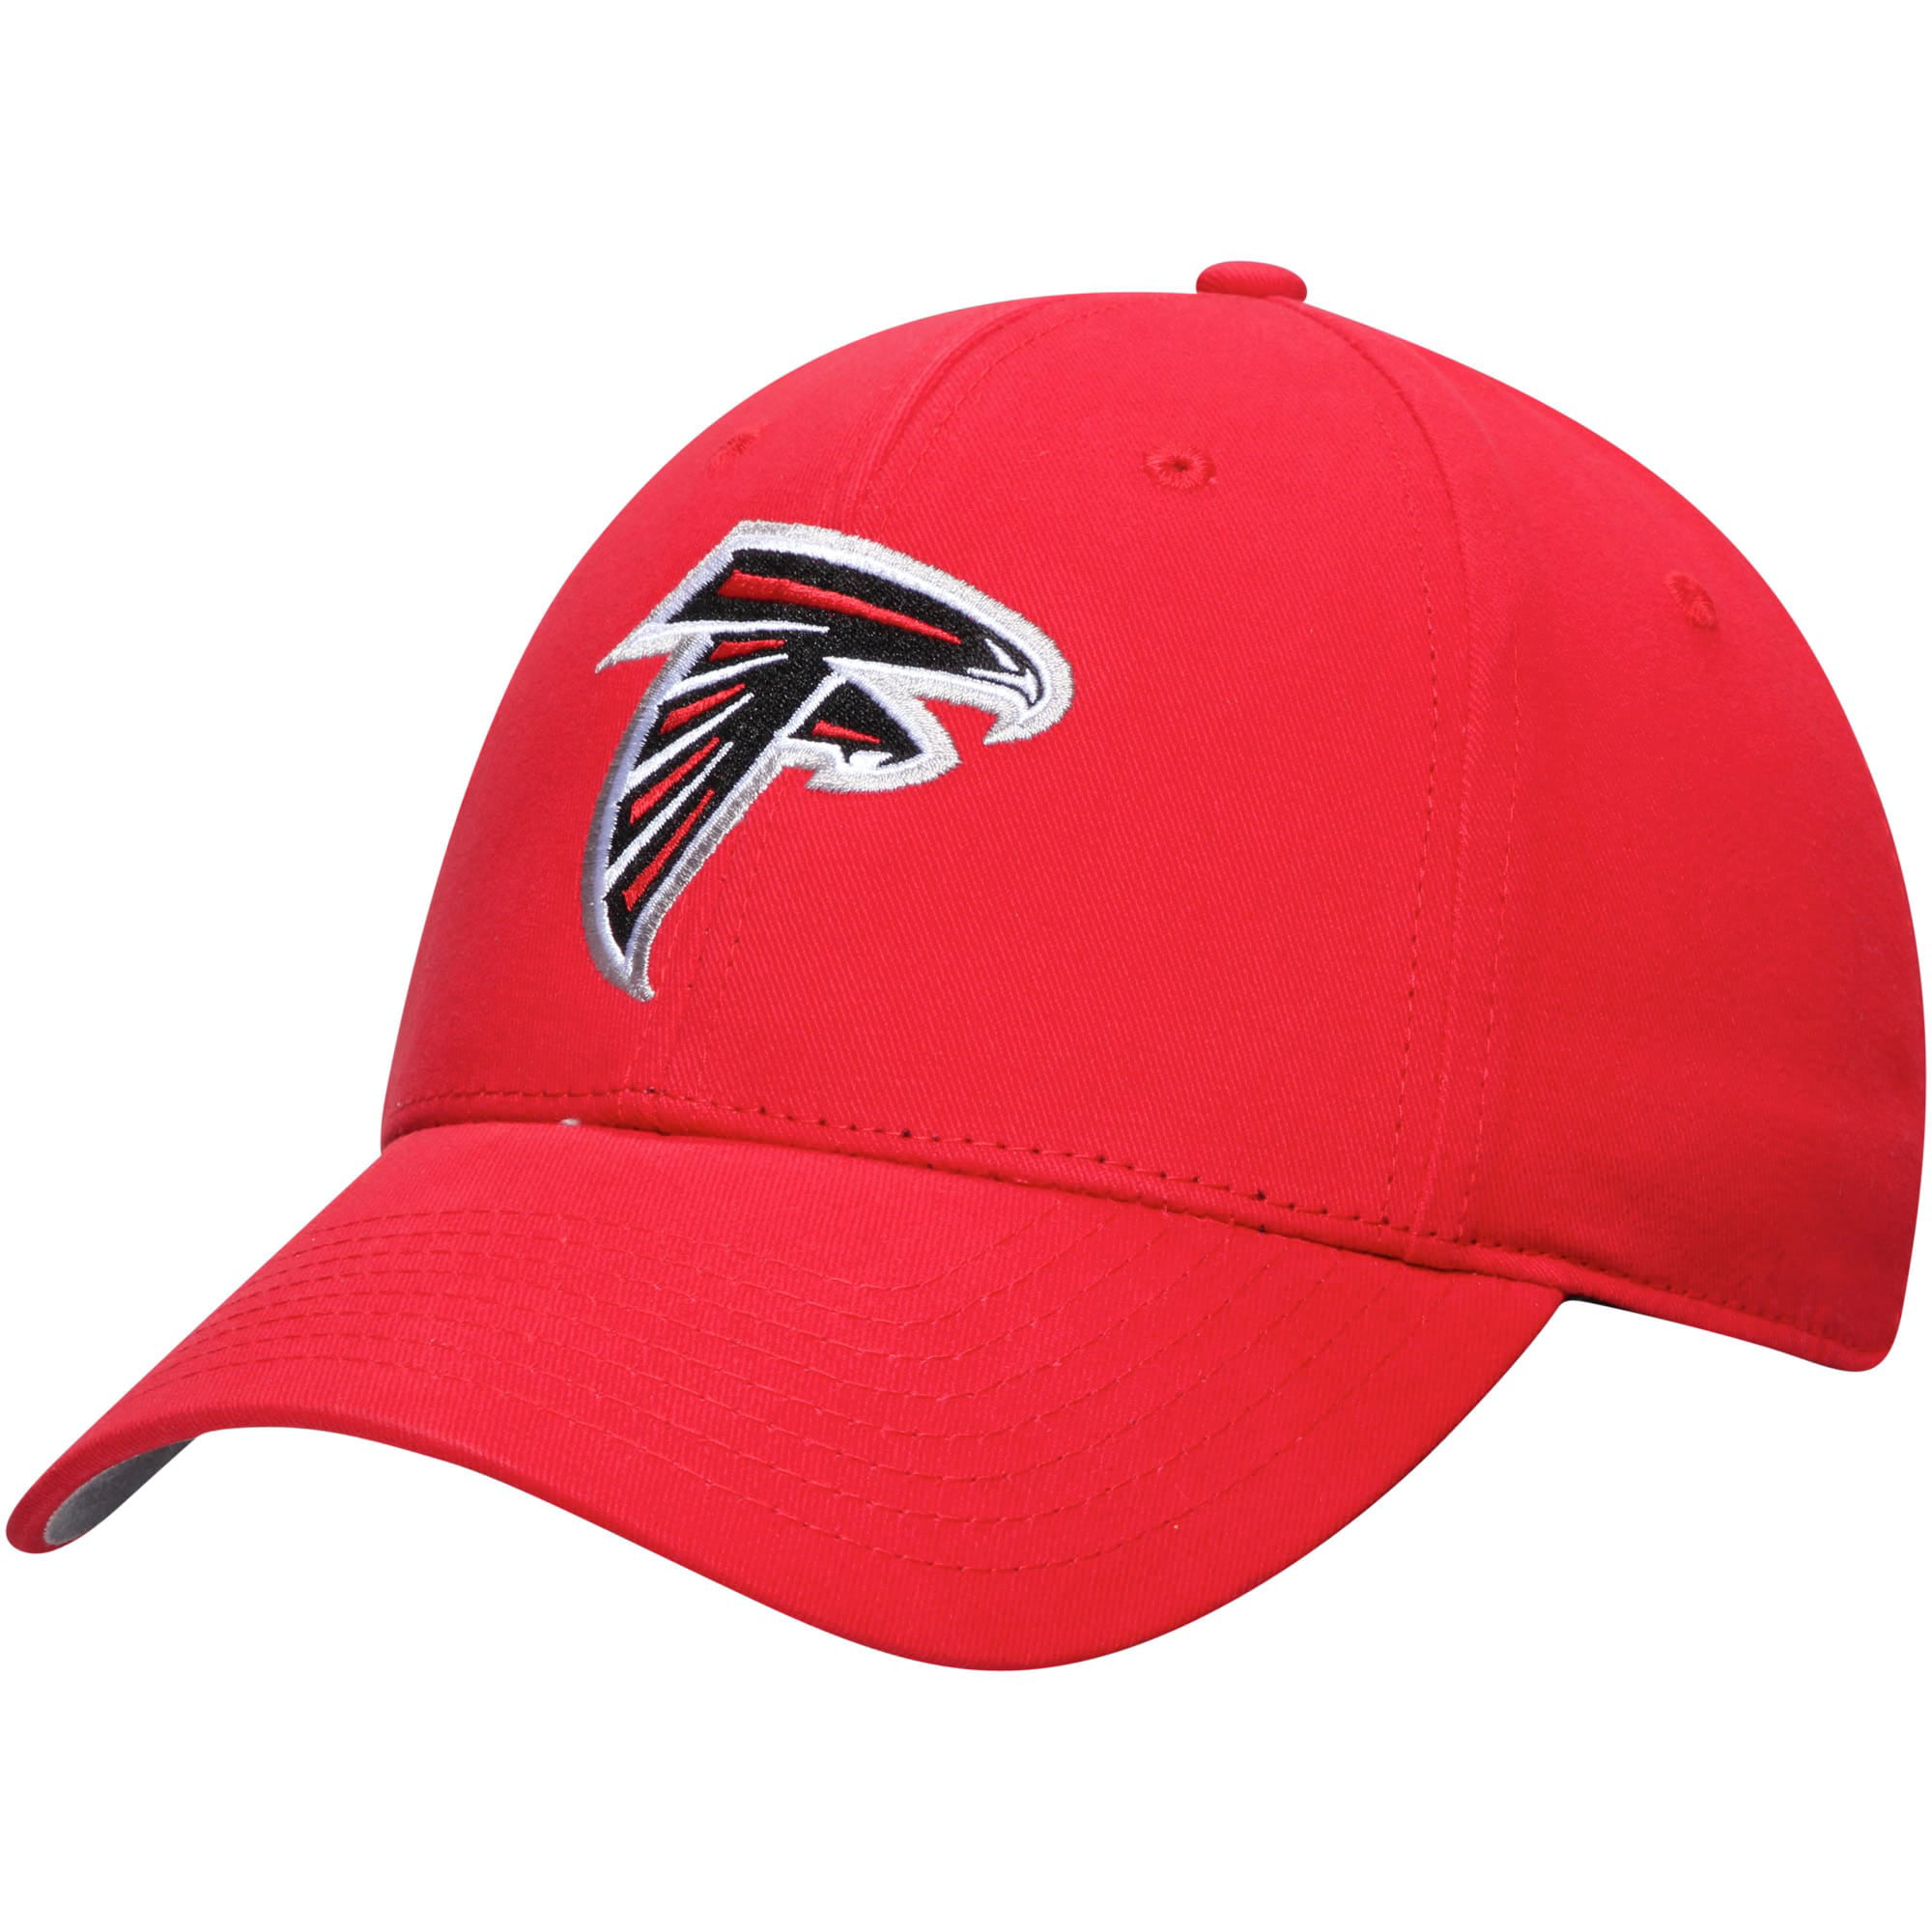 Alternate Adjustable Hat - Red - OSFA 